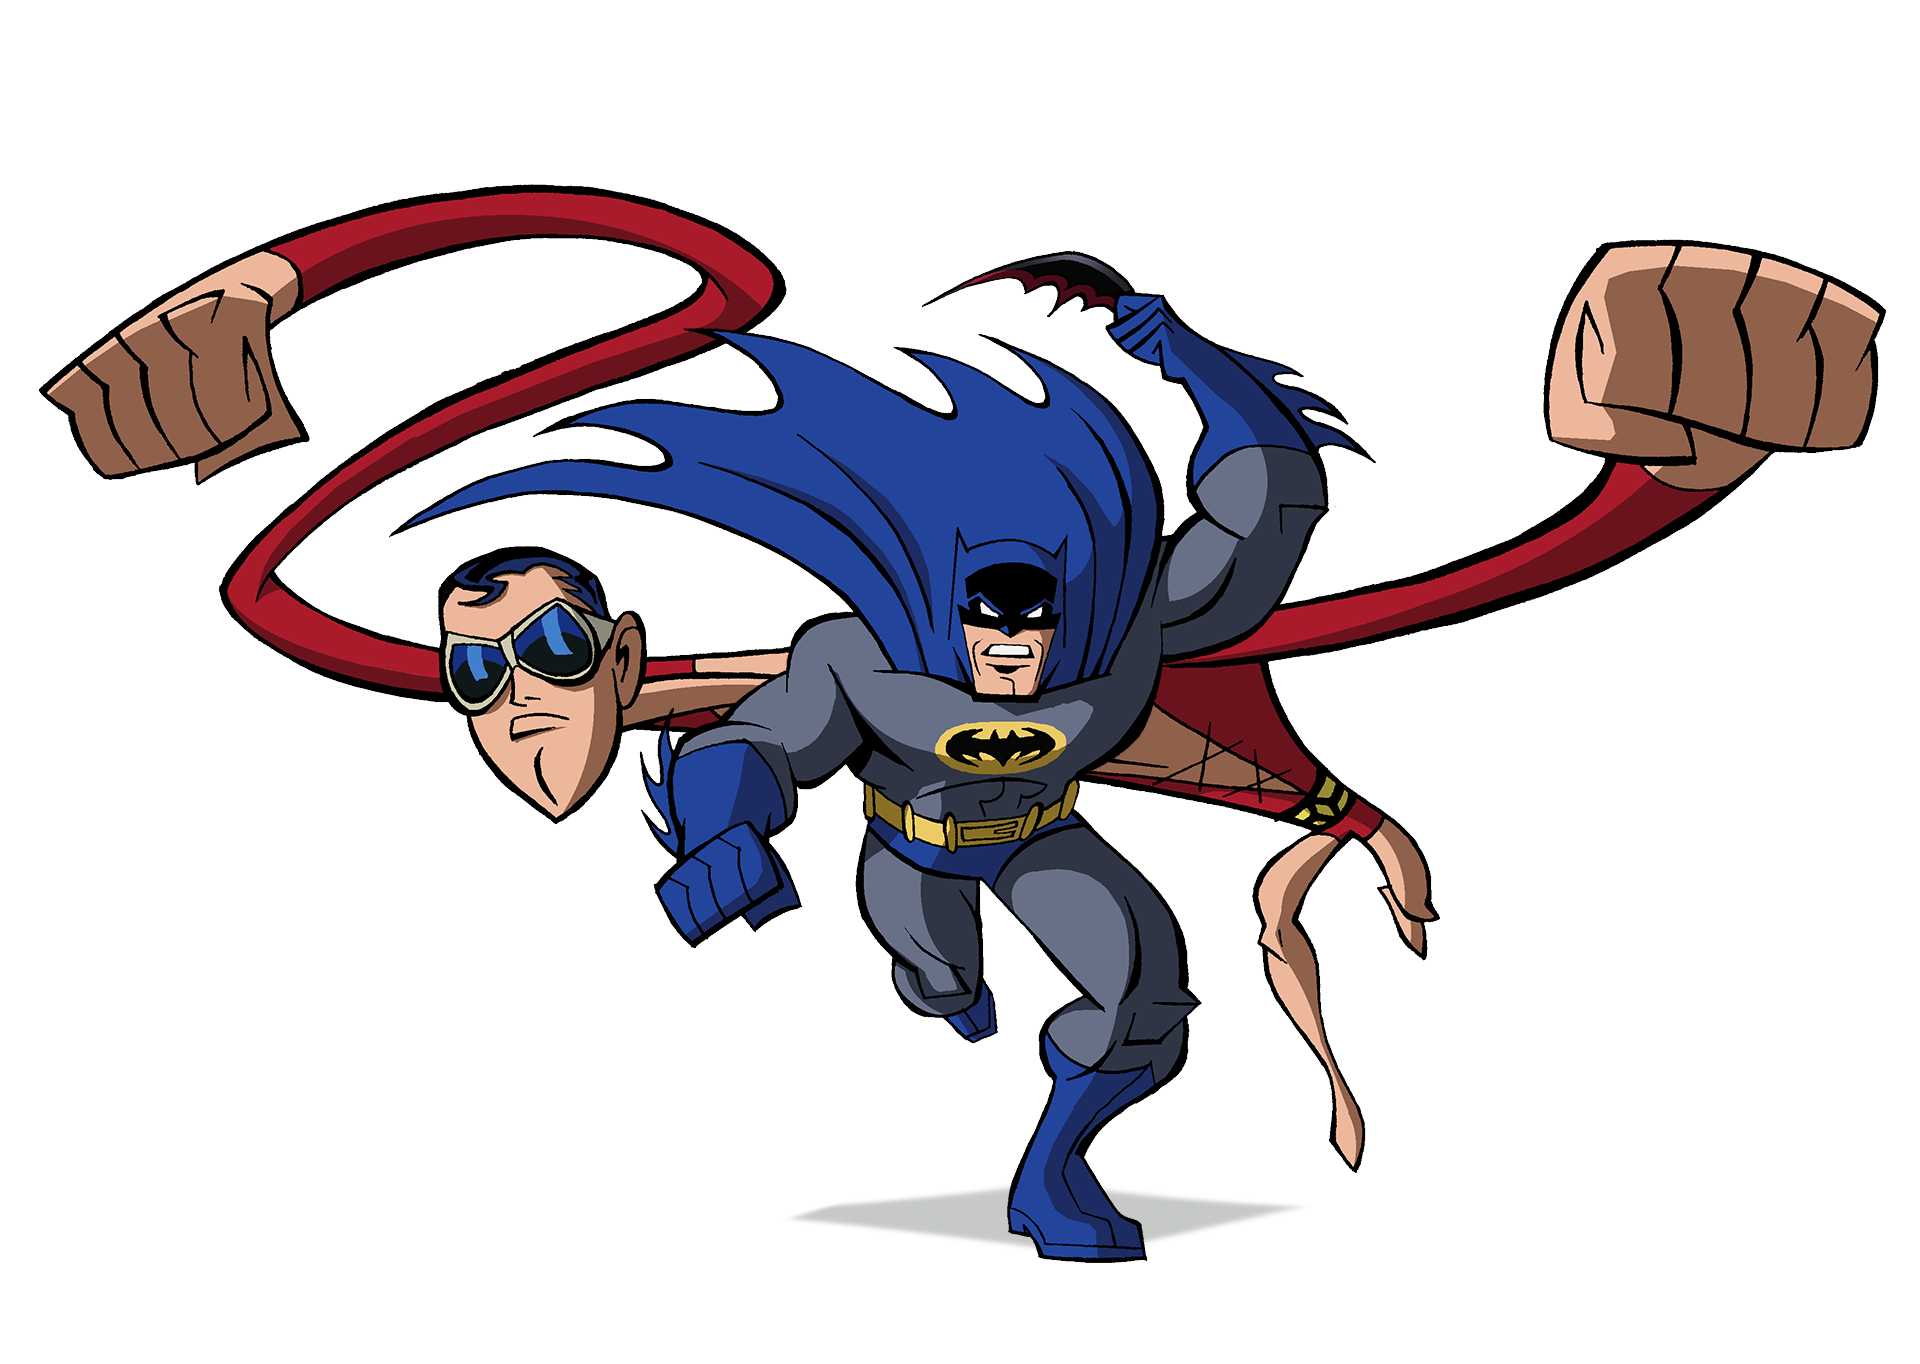 Batman: Stoer en Stoutmoedig